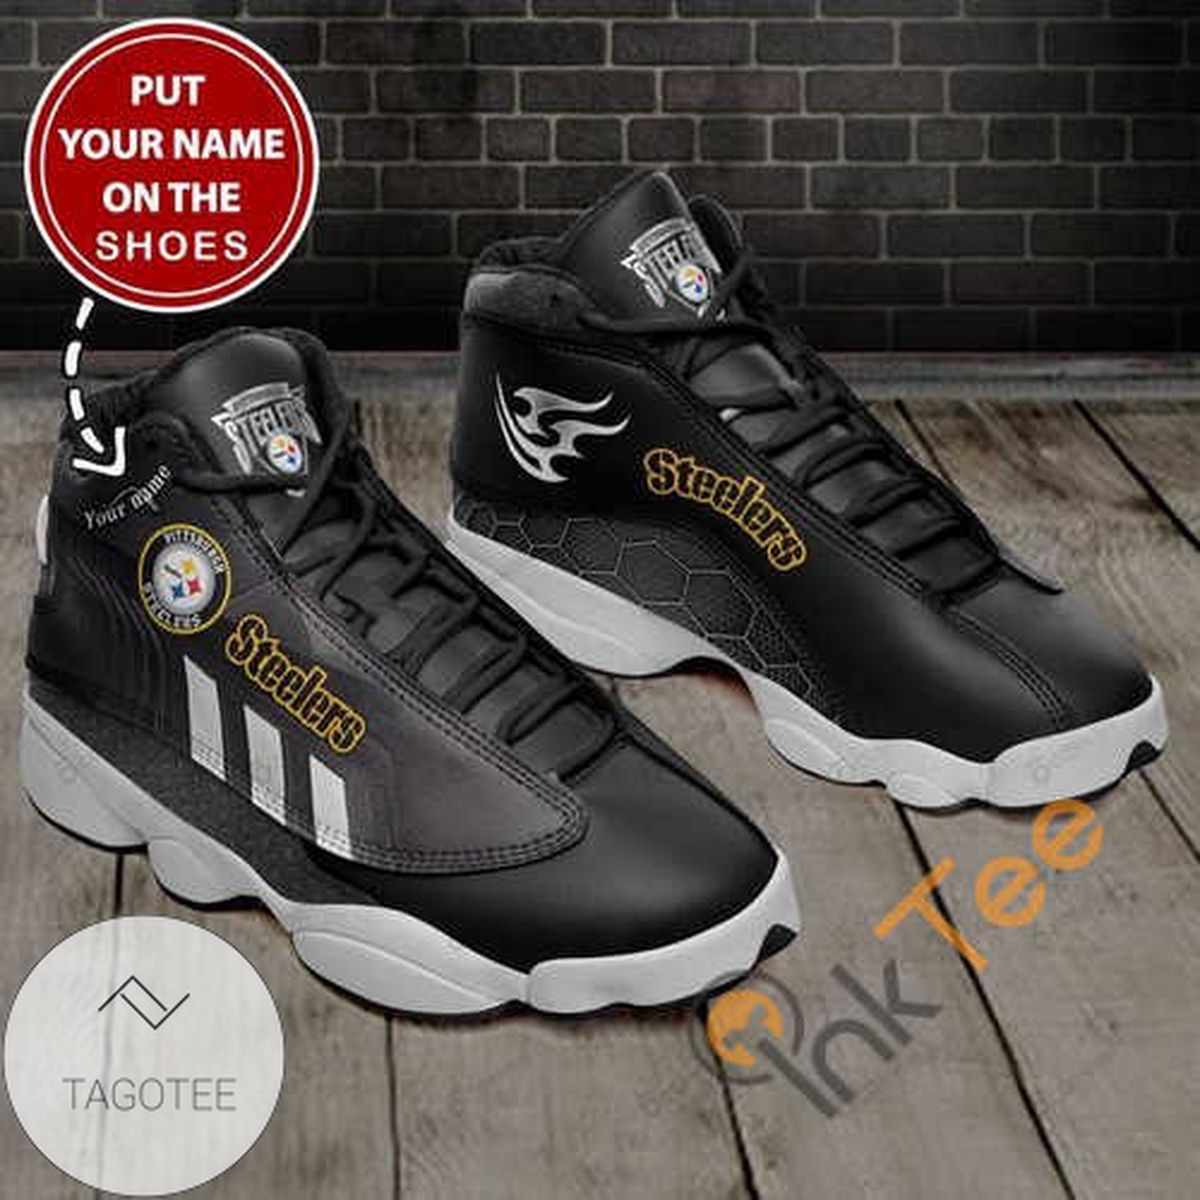 Pittsburgh Steelers 13 Personalized Air Jordan 13 Shoes Sneakers